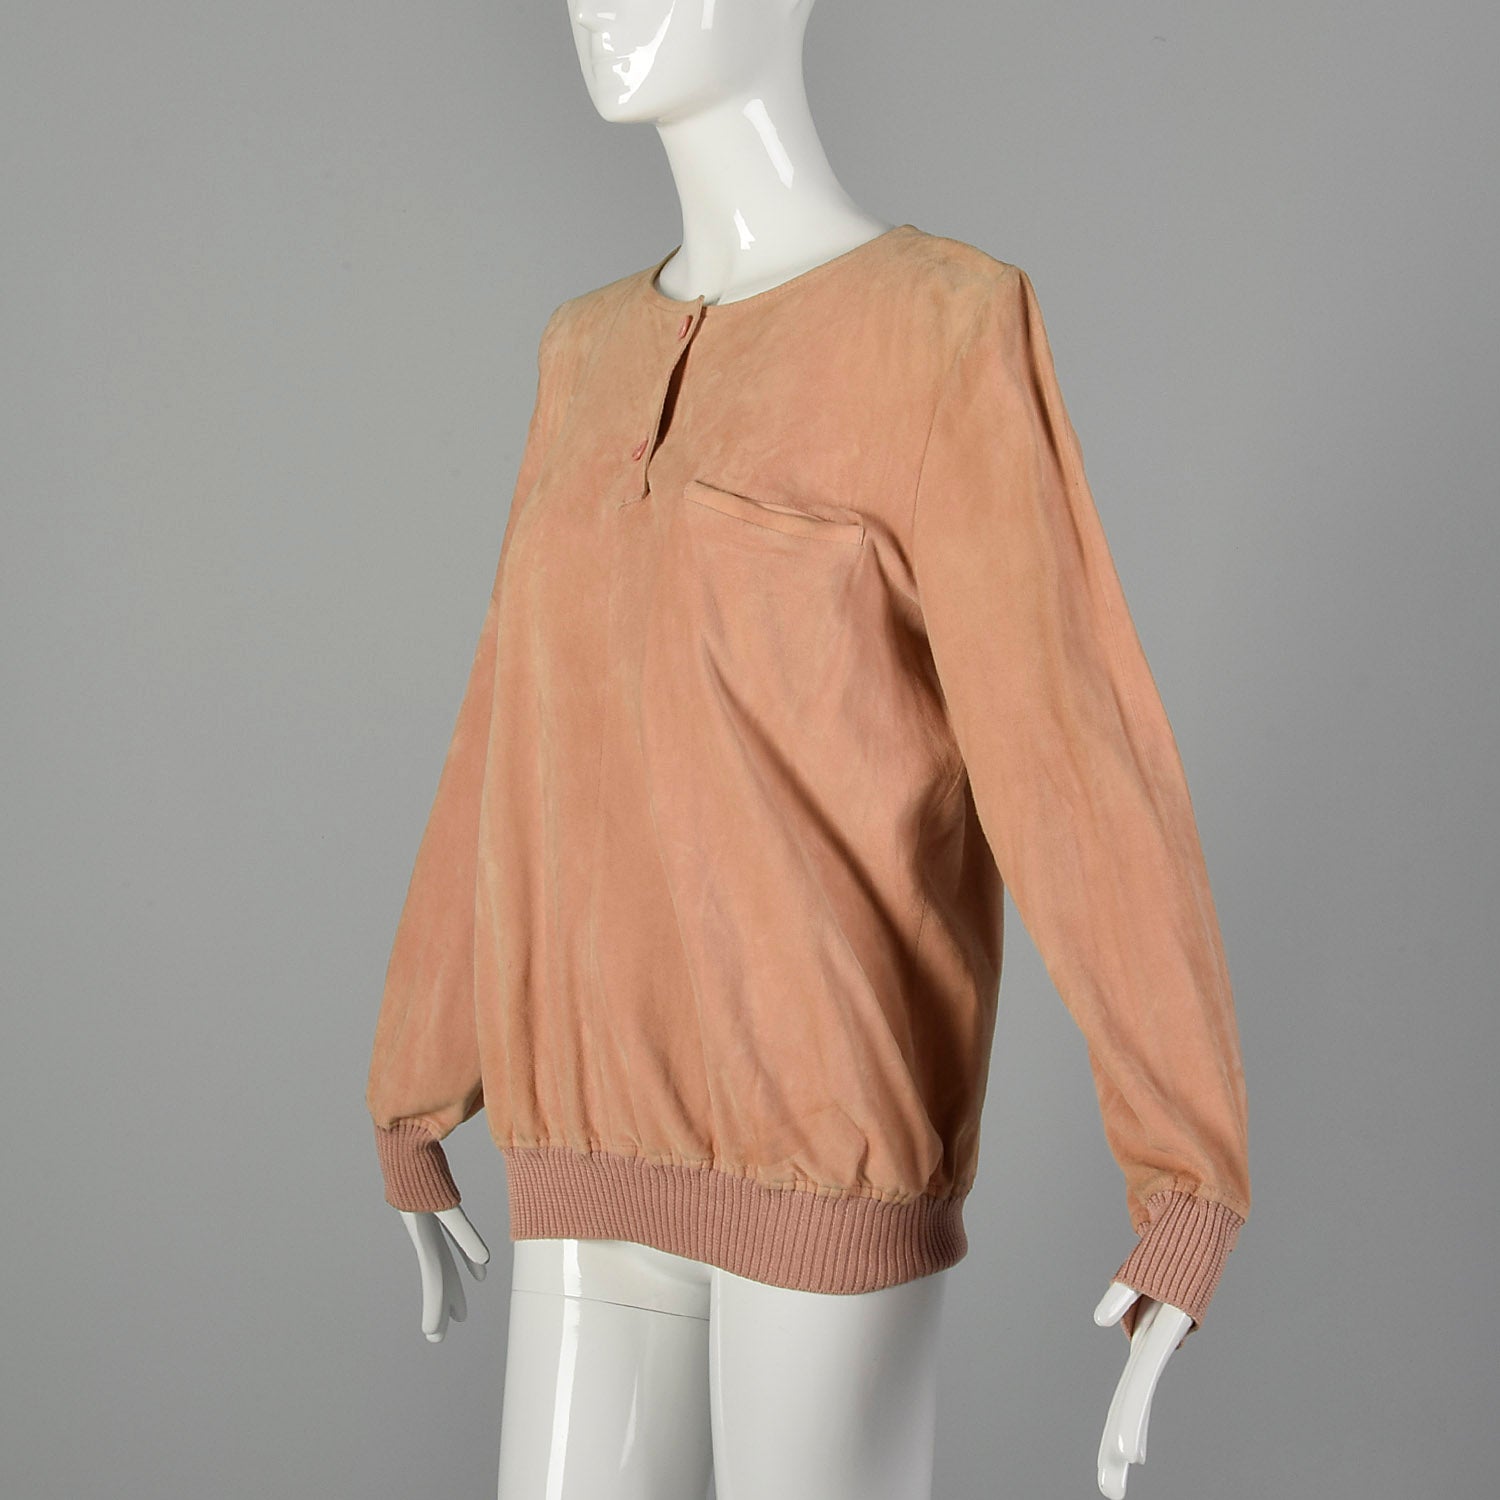 Medium-Large Valentino 1980s Pink Suede Shirt